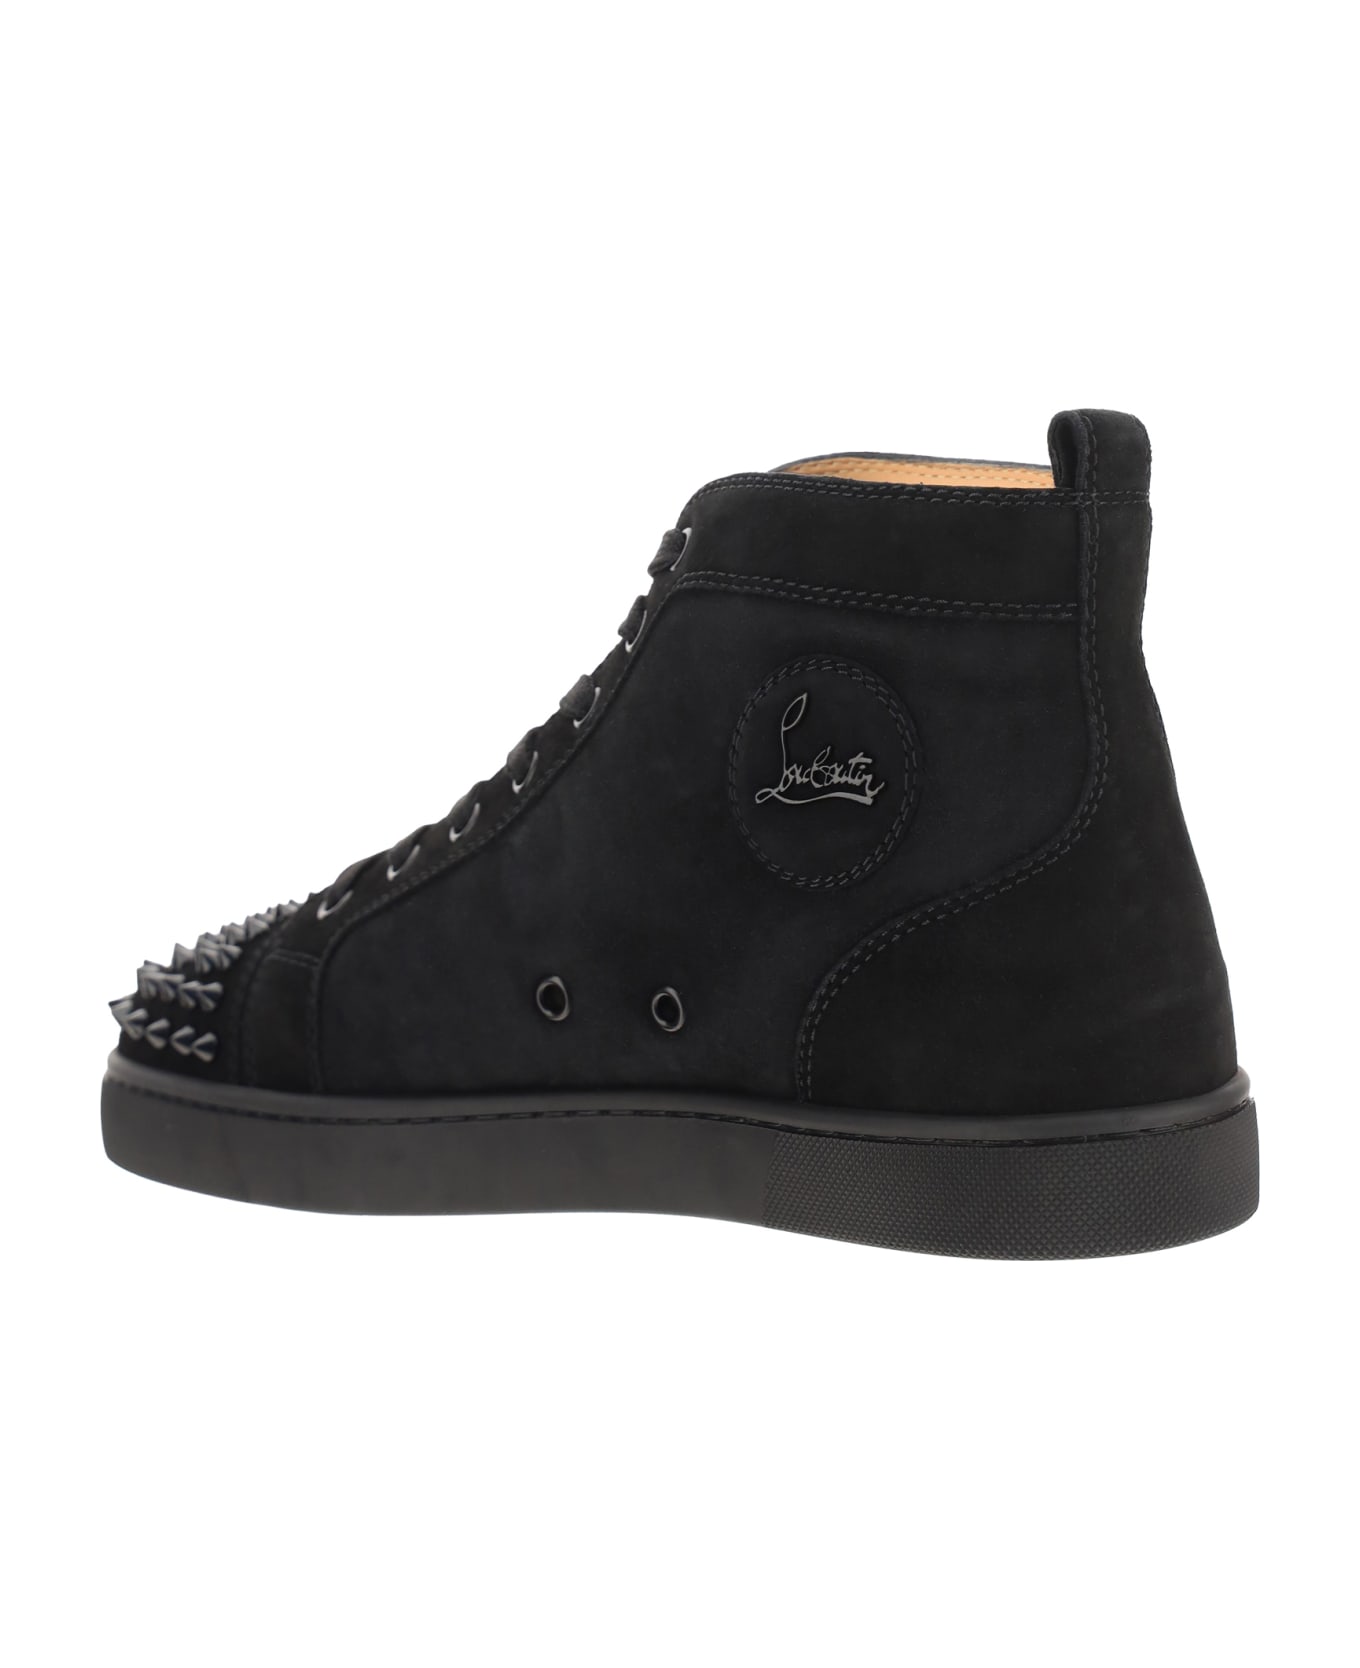 Christian Louboutin Lou Spikes Sneakers - Black/black/bk